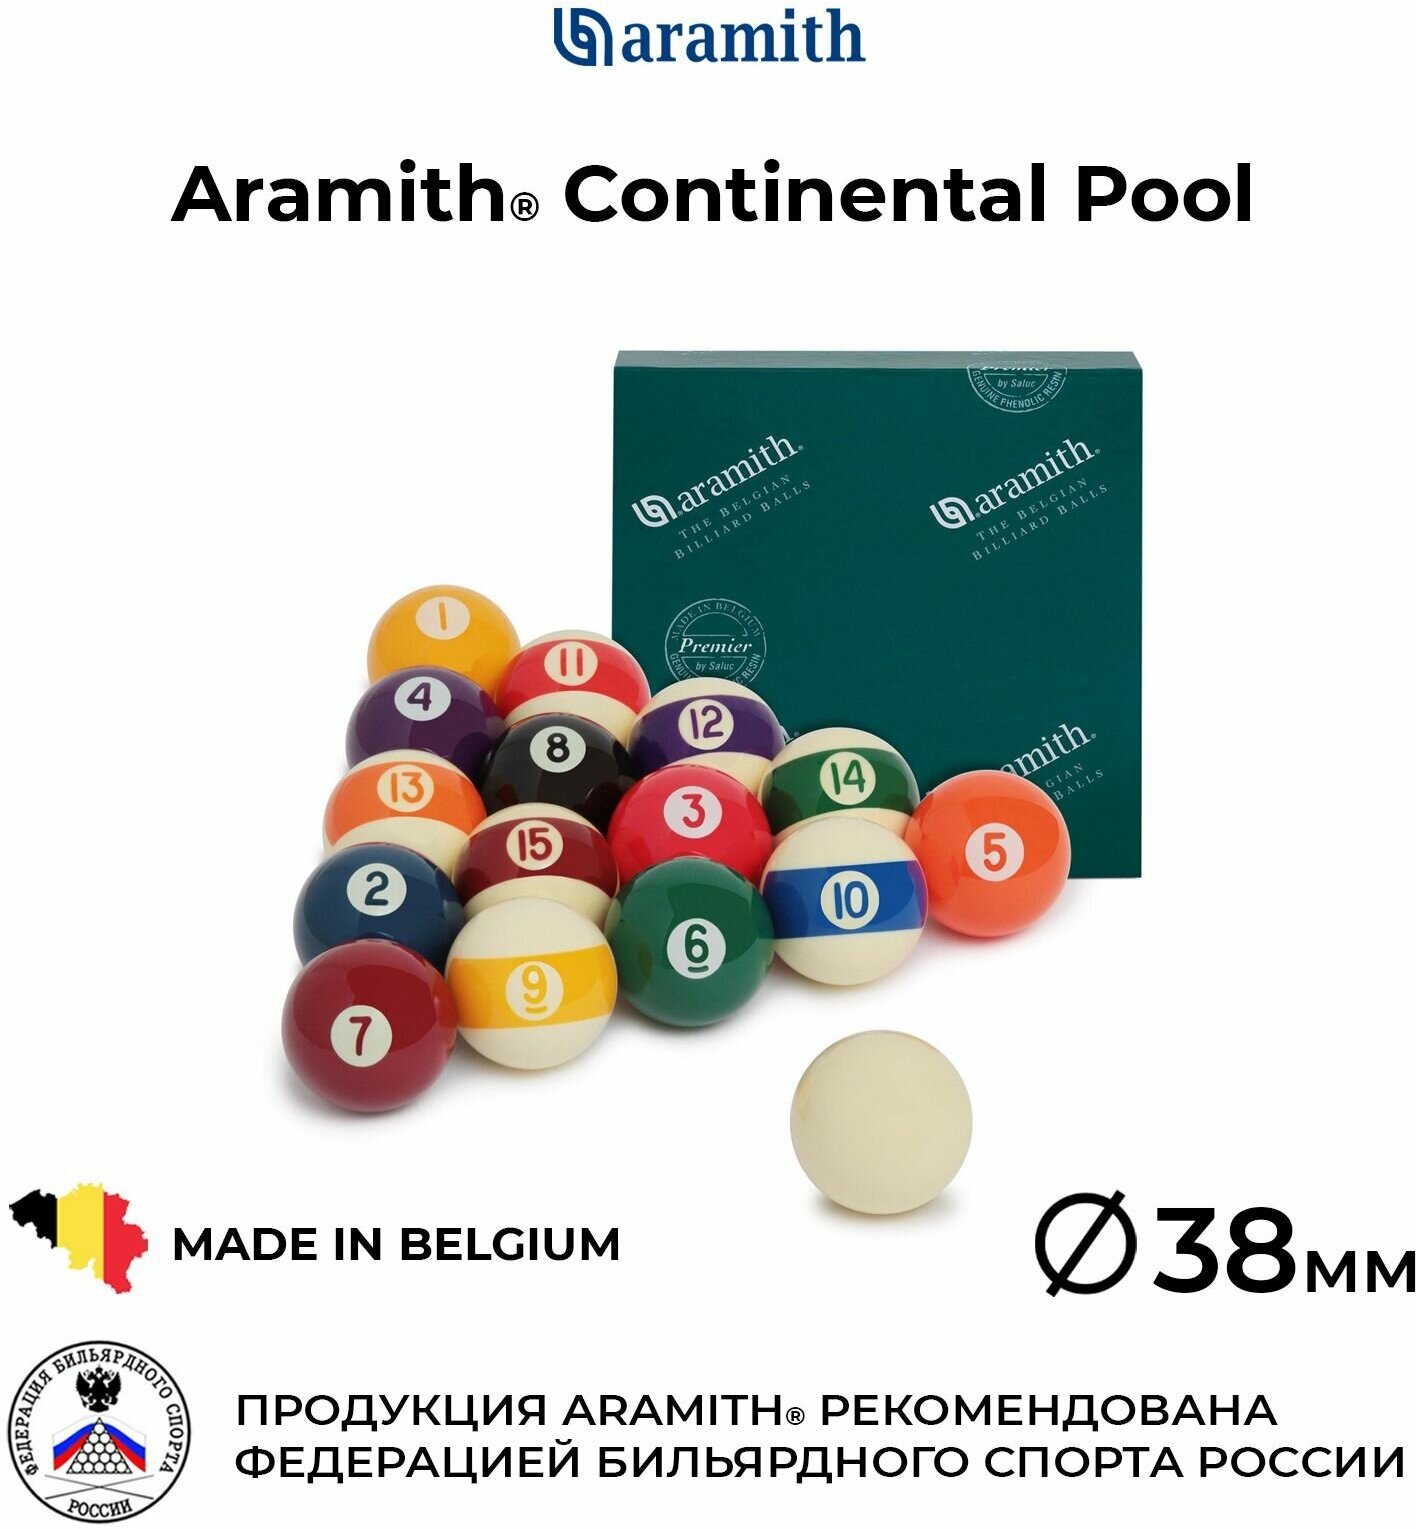 Бильярдные шары 38 мм Арамит Континенталь для игры в пул / Aramith Continental Pool 38 мм белый биток 16 шт.